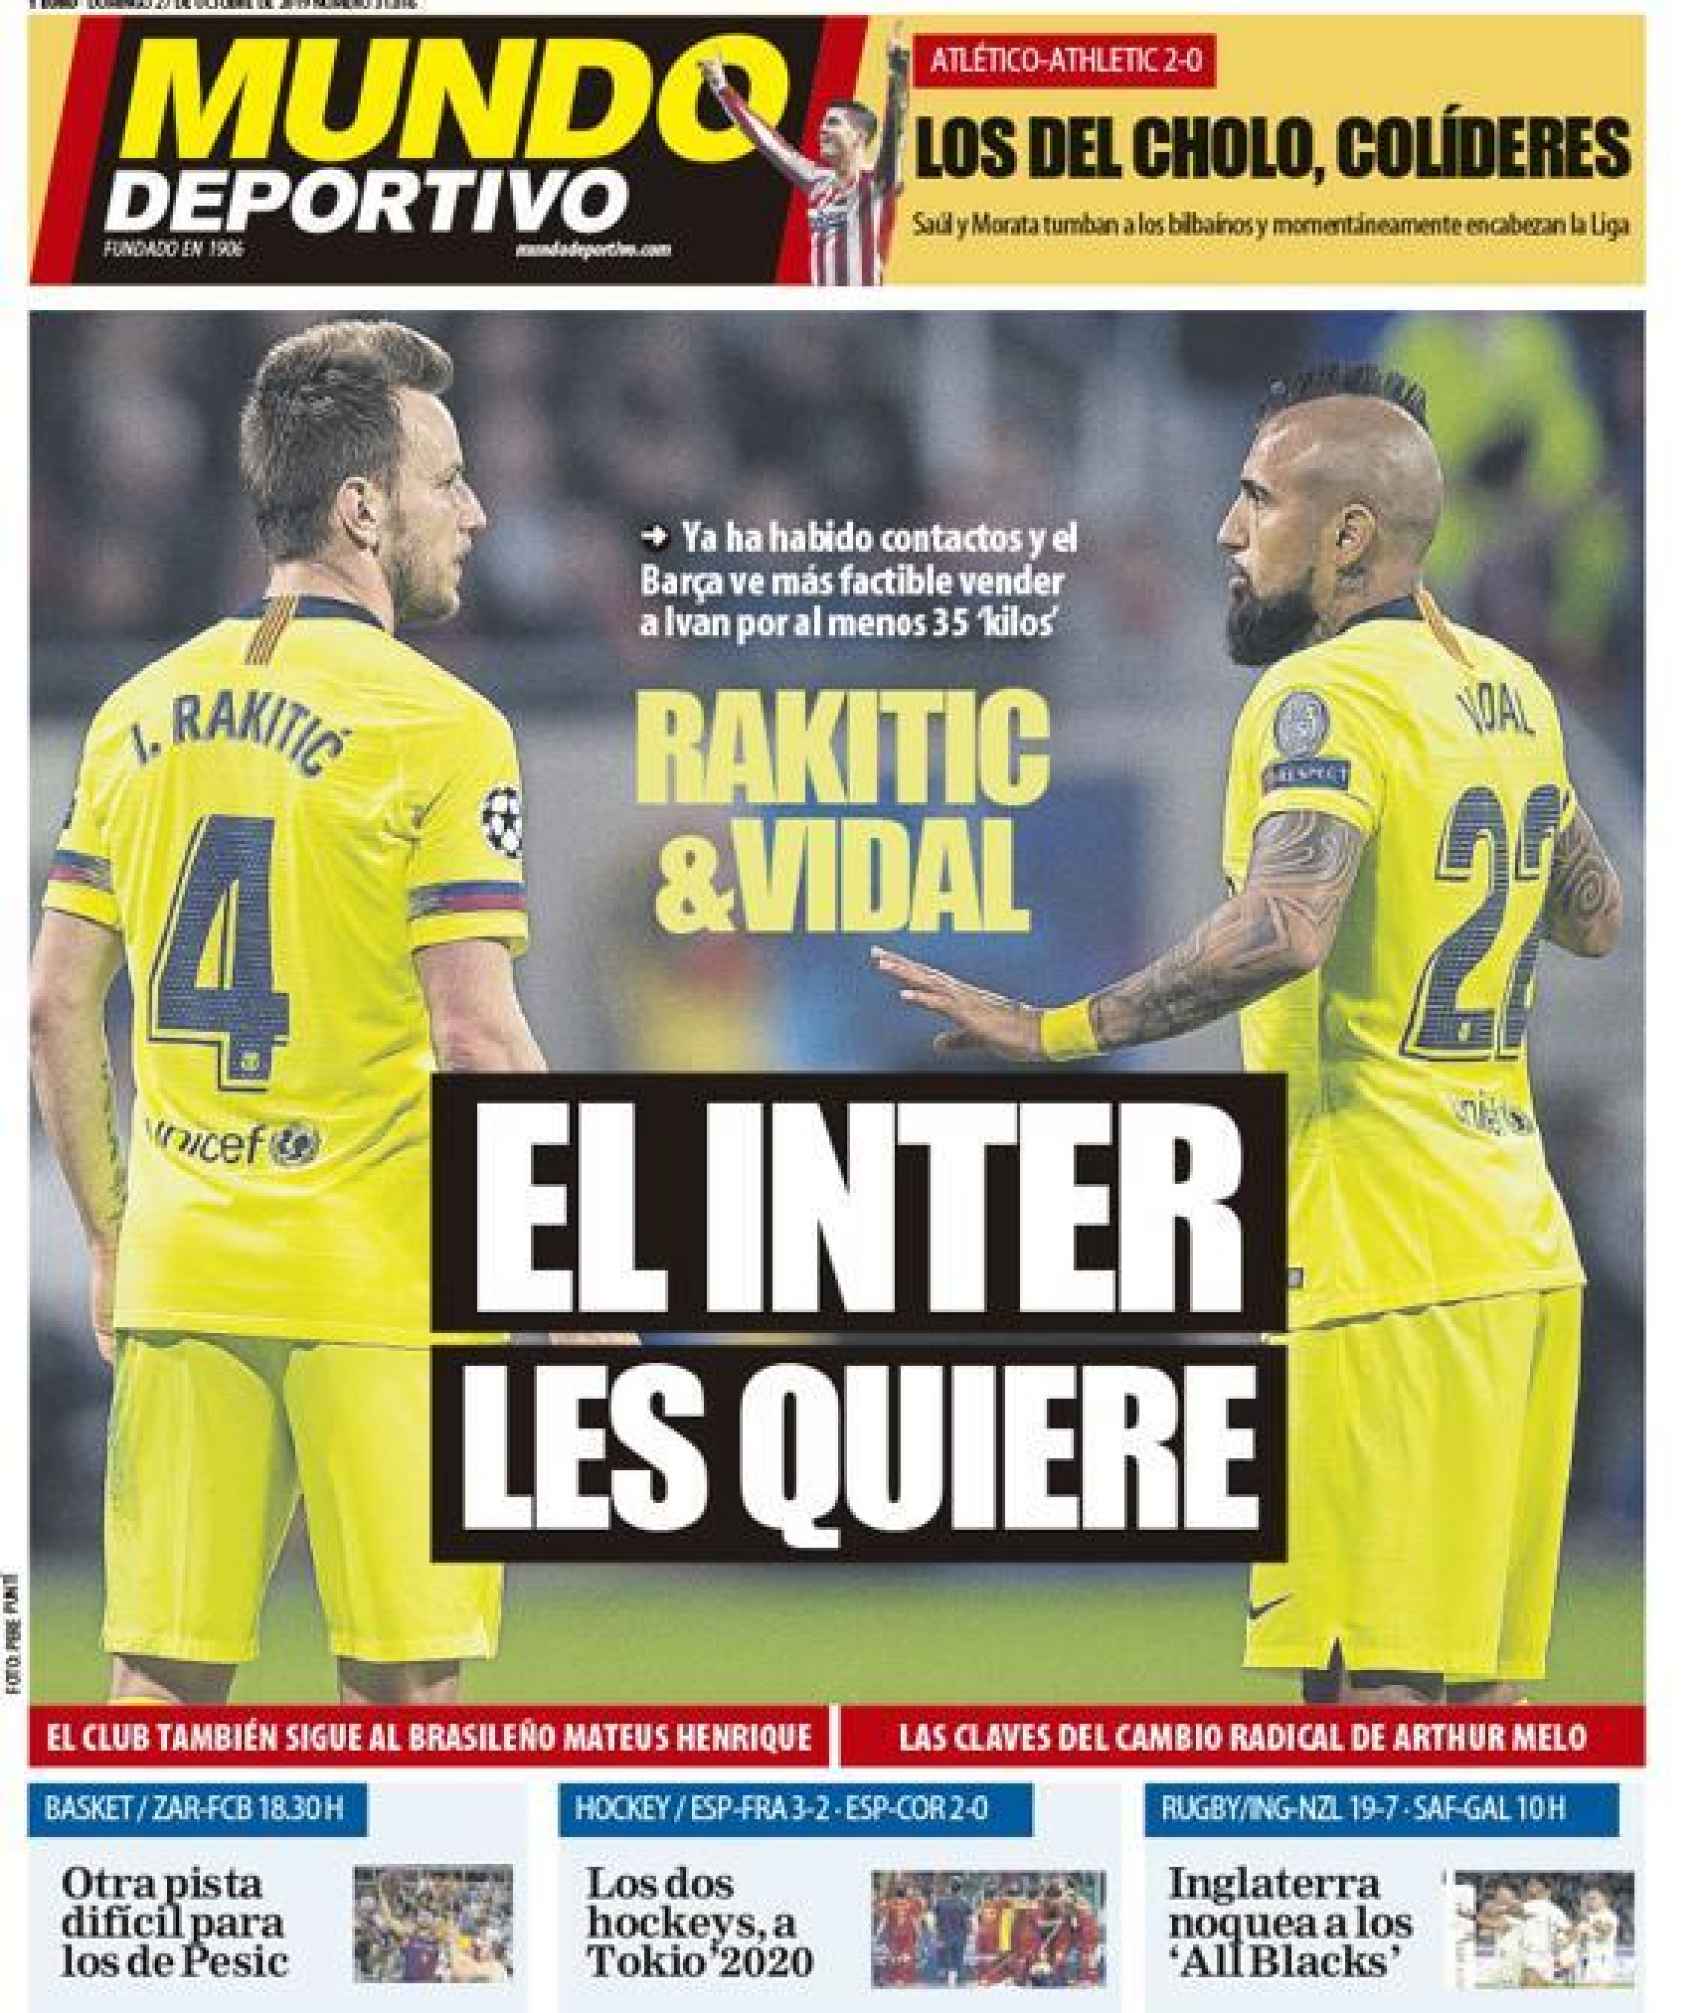 La portada del diario Mundo Deportivo (27/10/2019)1706 x 2013